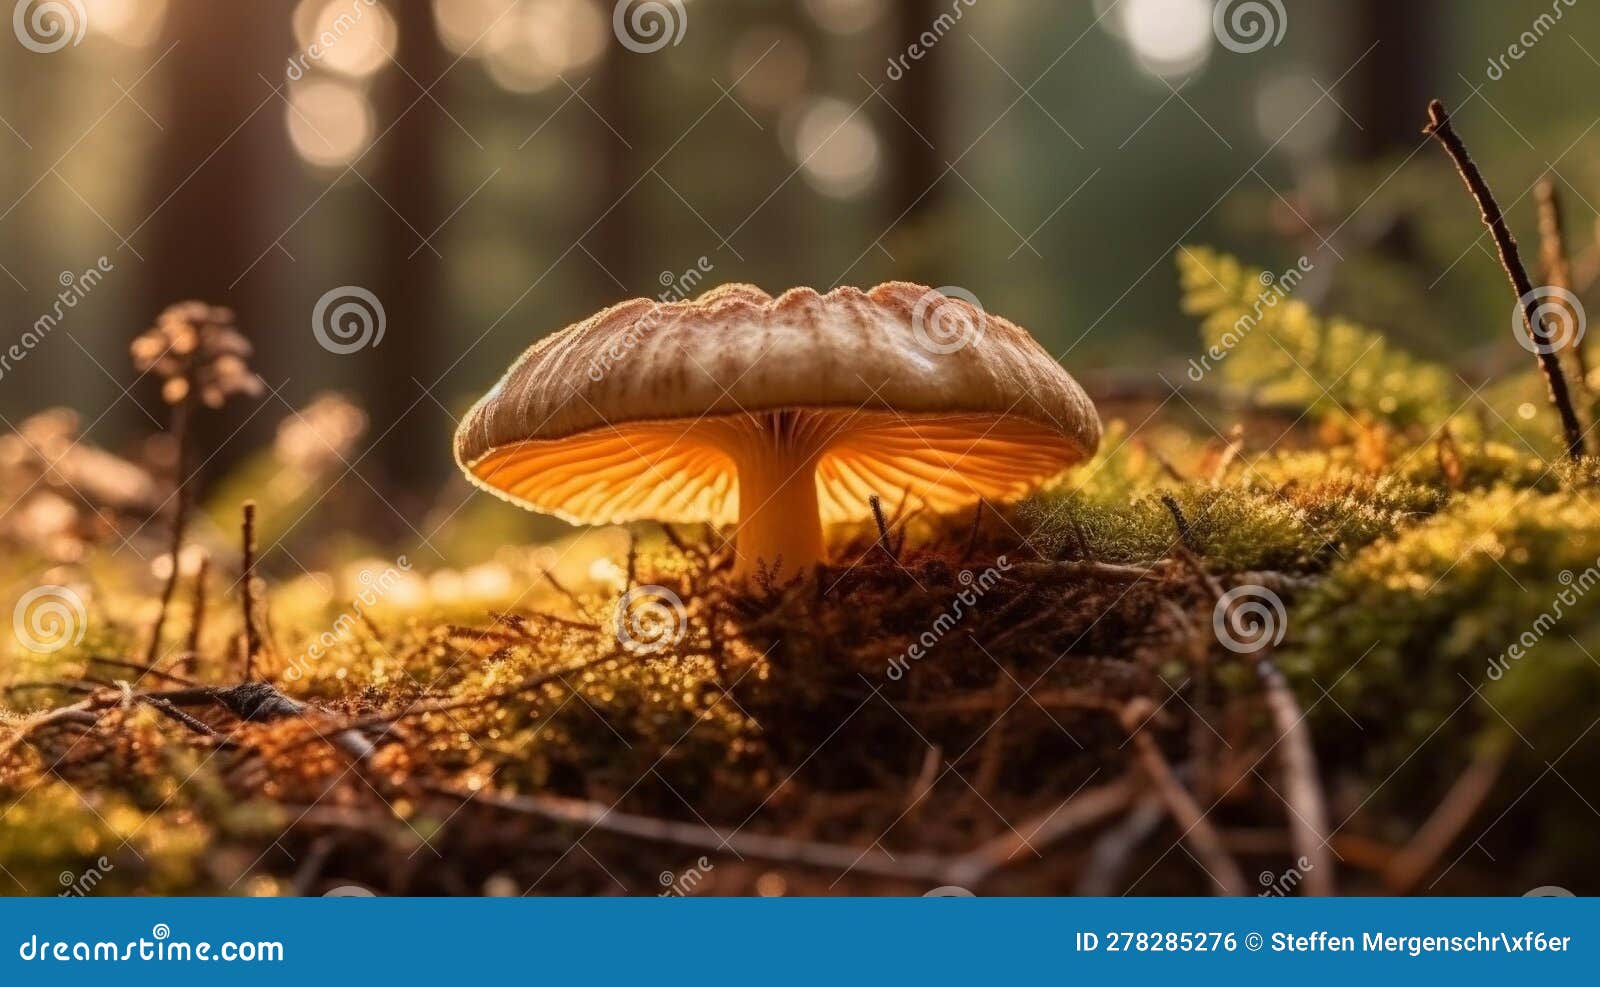 golden hour mushroom in forest shadow